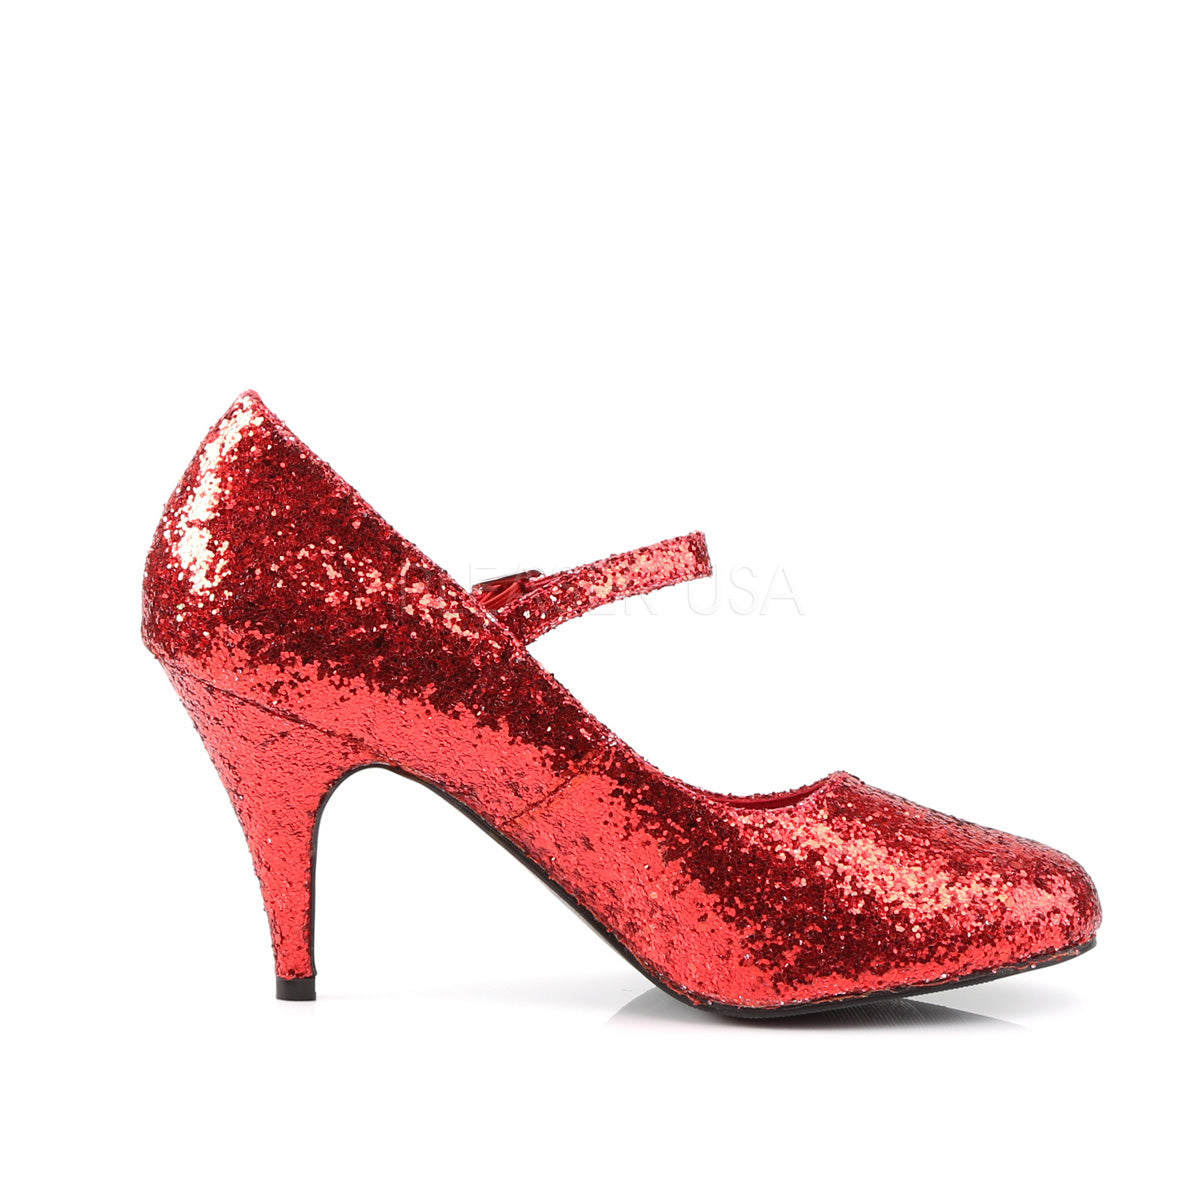 Red Glitter Burlesque Heels | Funtasma Glinda-50G | OtherWorld Shoes